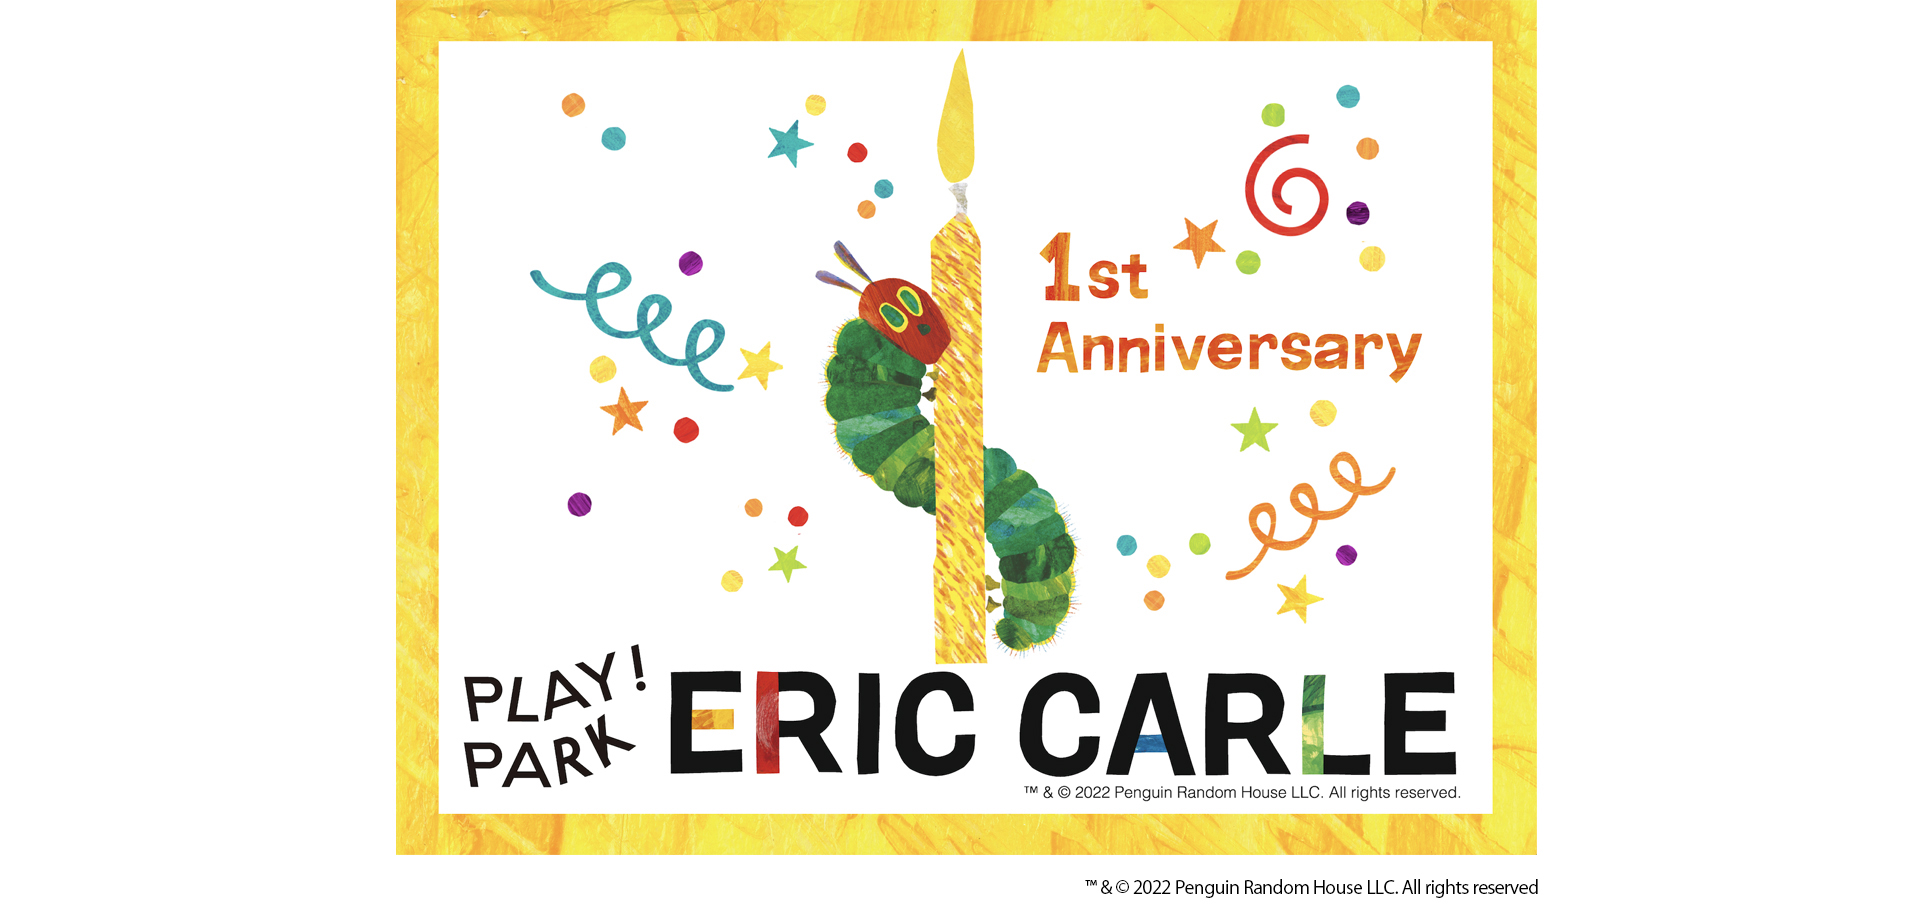 PLAY! PARK ERIC CARLE 1st Anniversary 二子玉川ライズ・ショッピングセンター